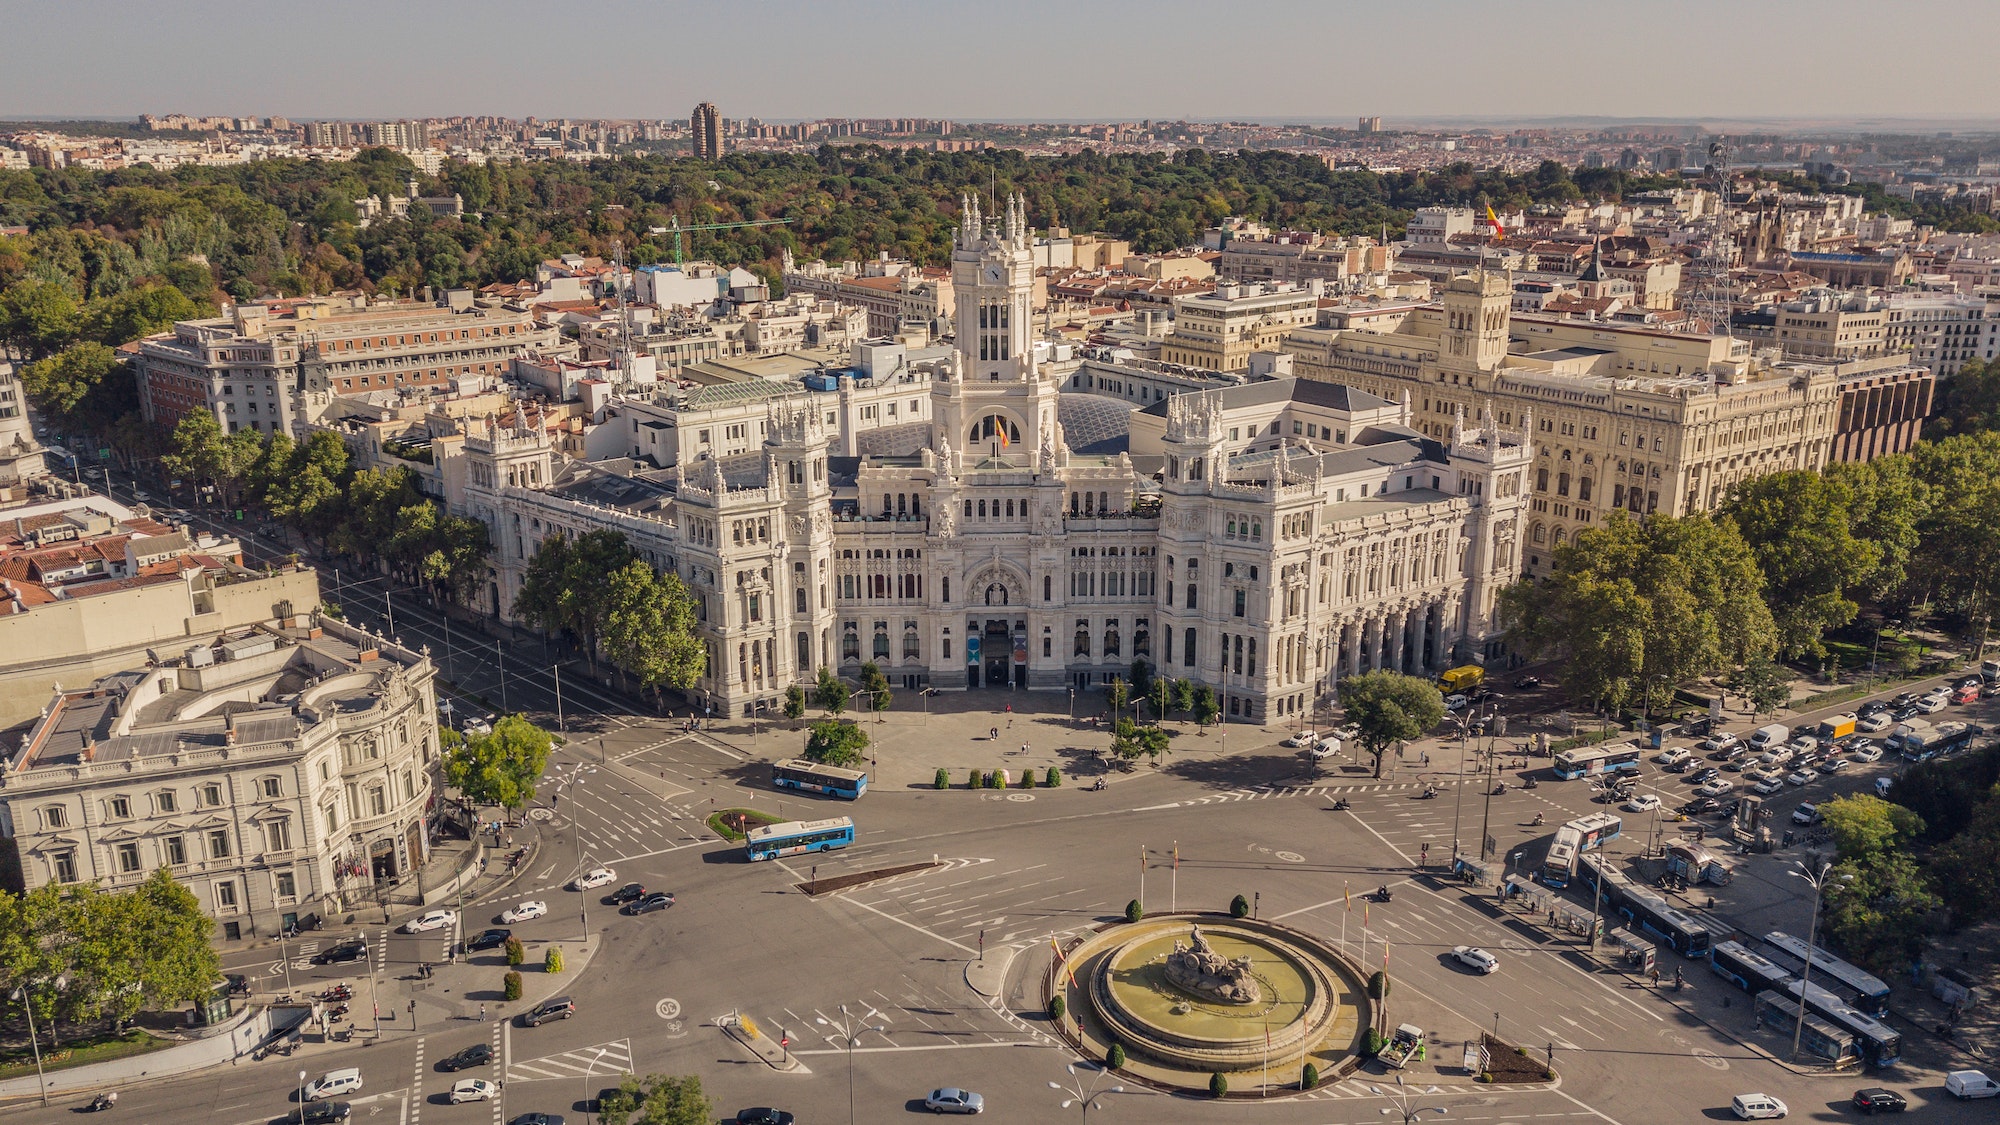 City hall of Madrid and Plaza de Cibeles